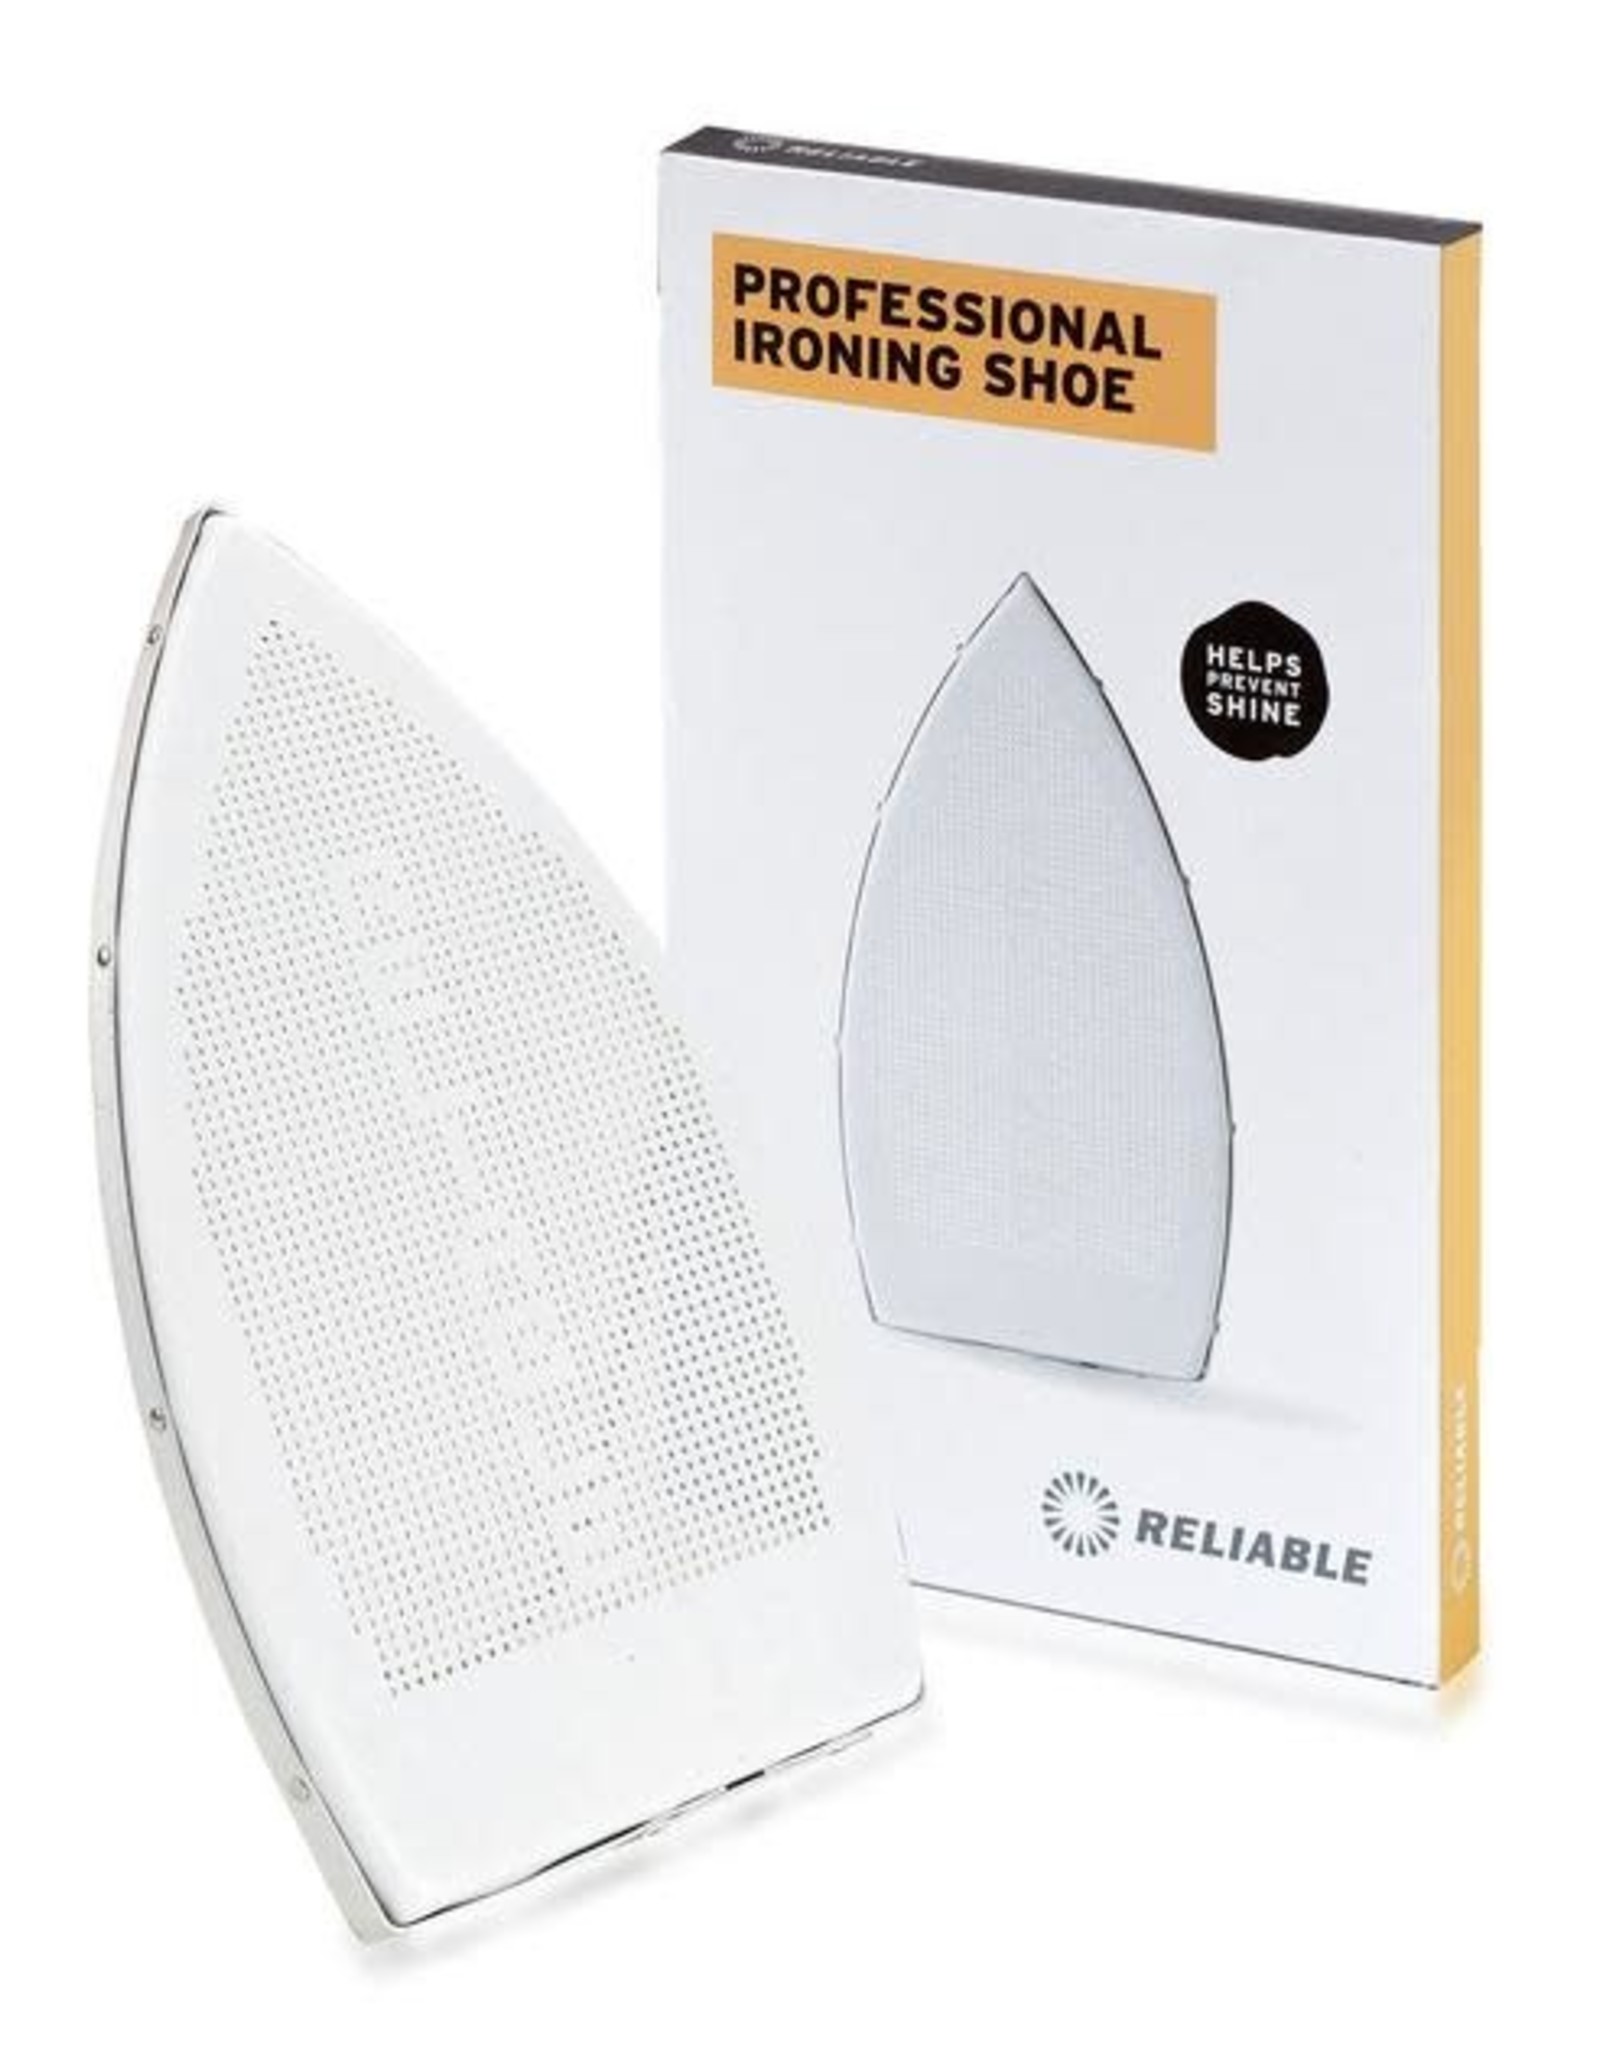 Reliable Professional ironing shoe (2000IA)